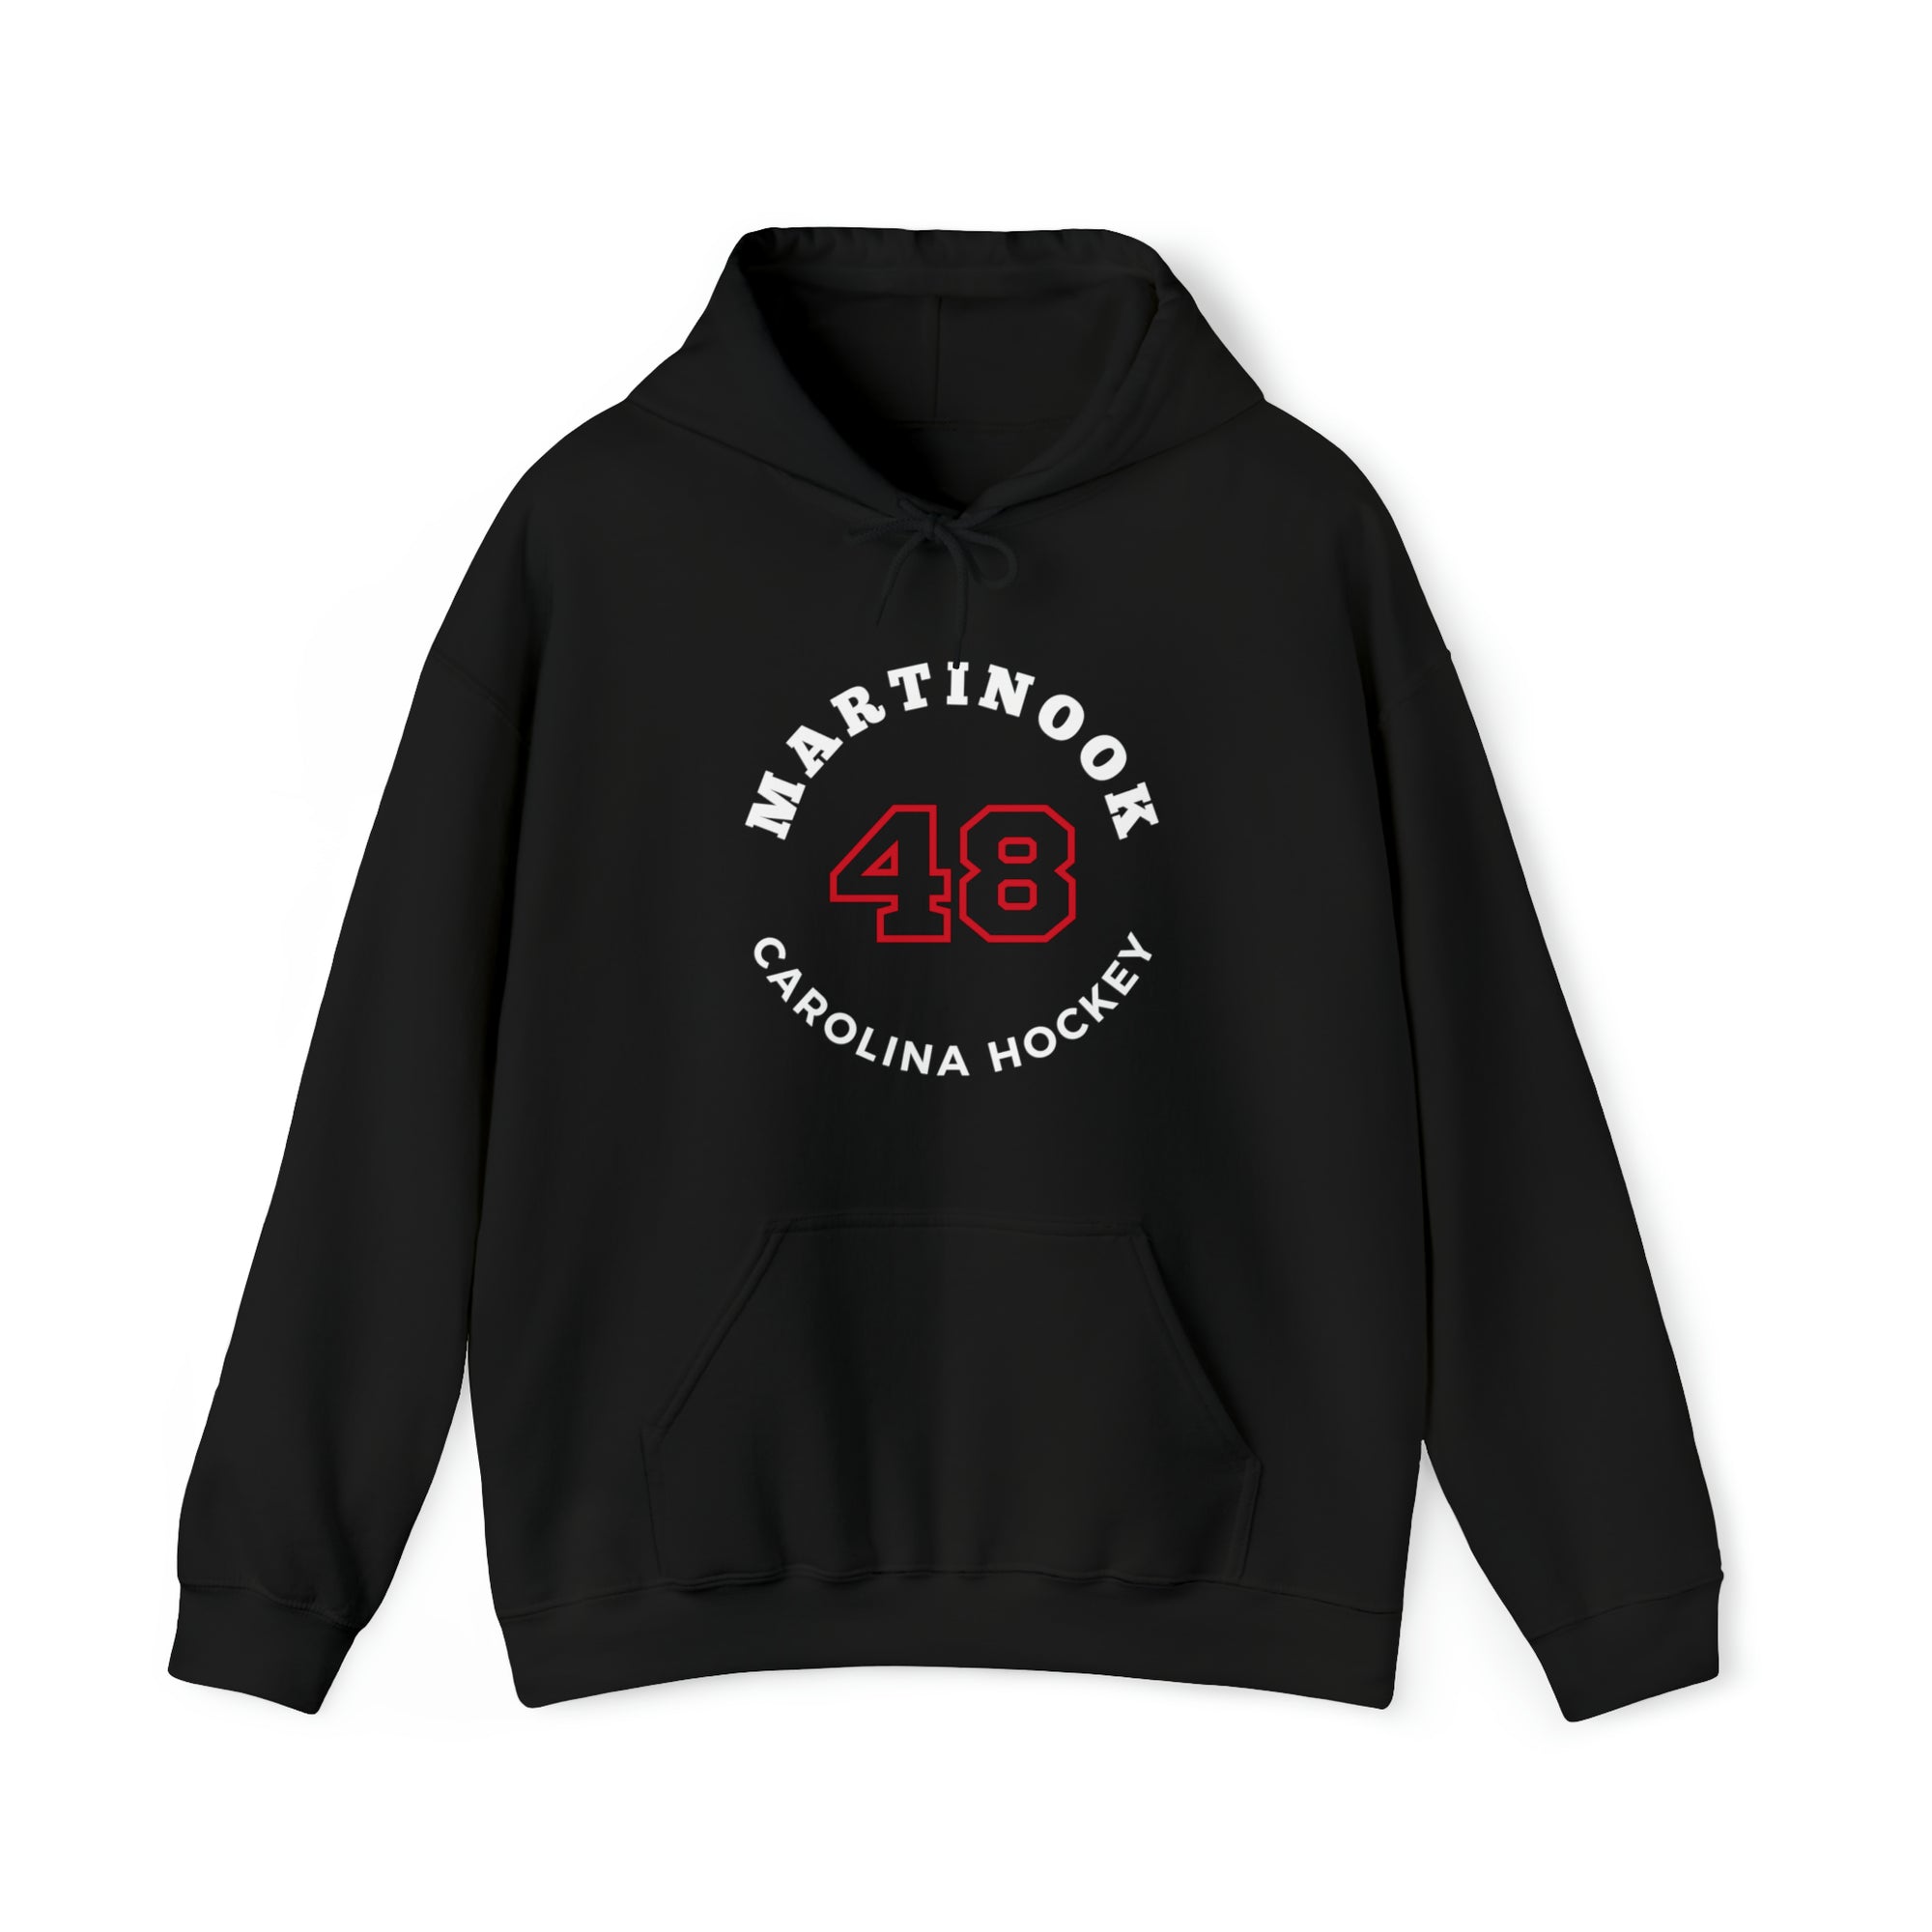 Martinook 48 Carolina Hockey Number Arch Design Unisex Hooded Sweatshirt